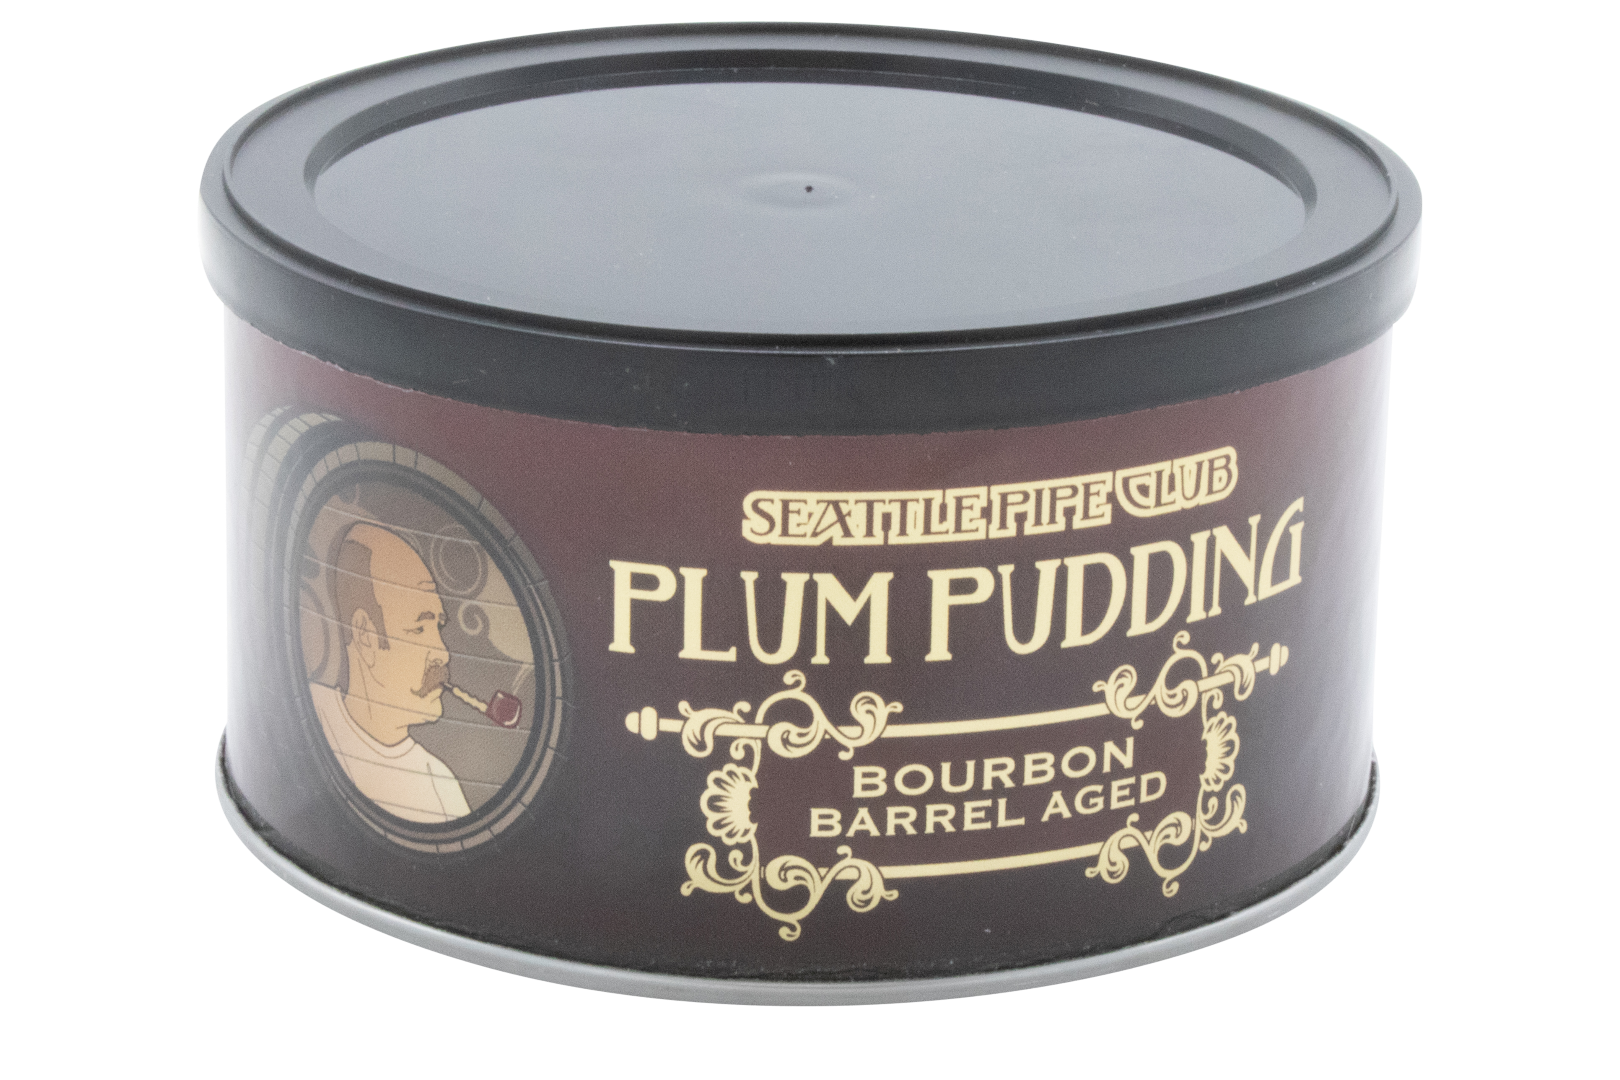 Seattle Pipe Club Plum Pudding Bourbon Barrel Aged - Best Liquor Blends